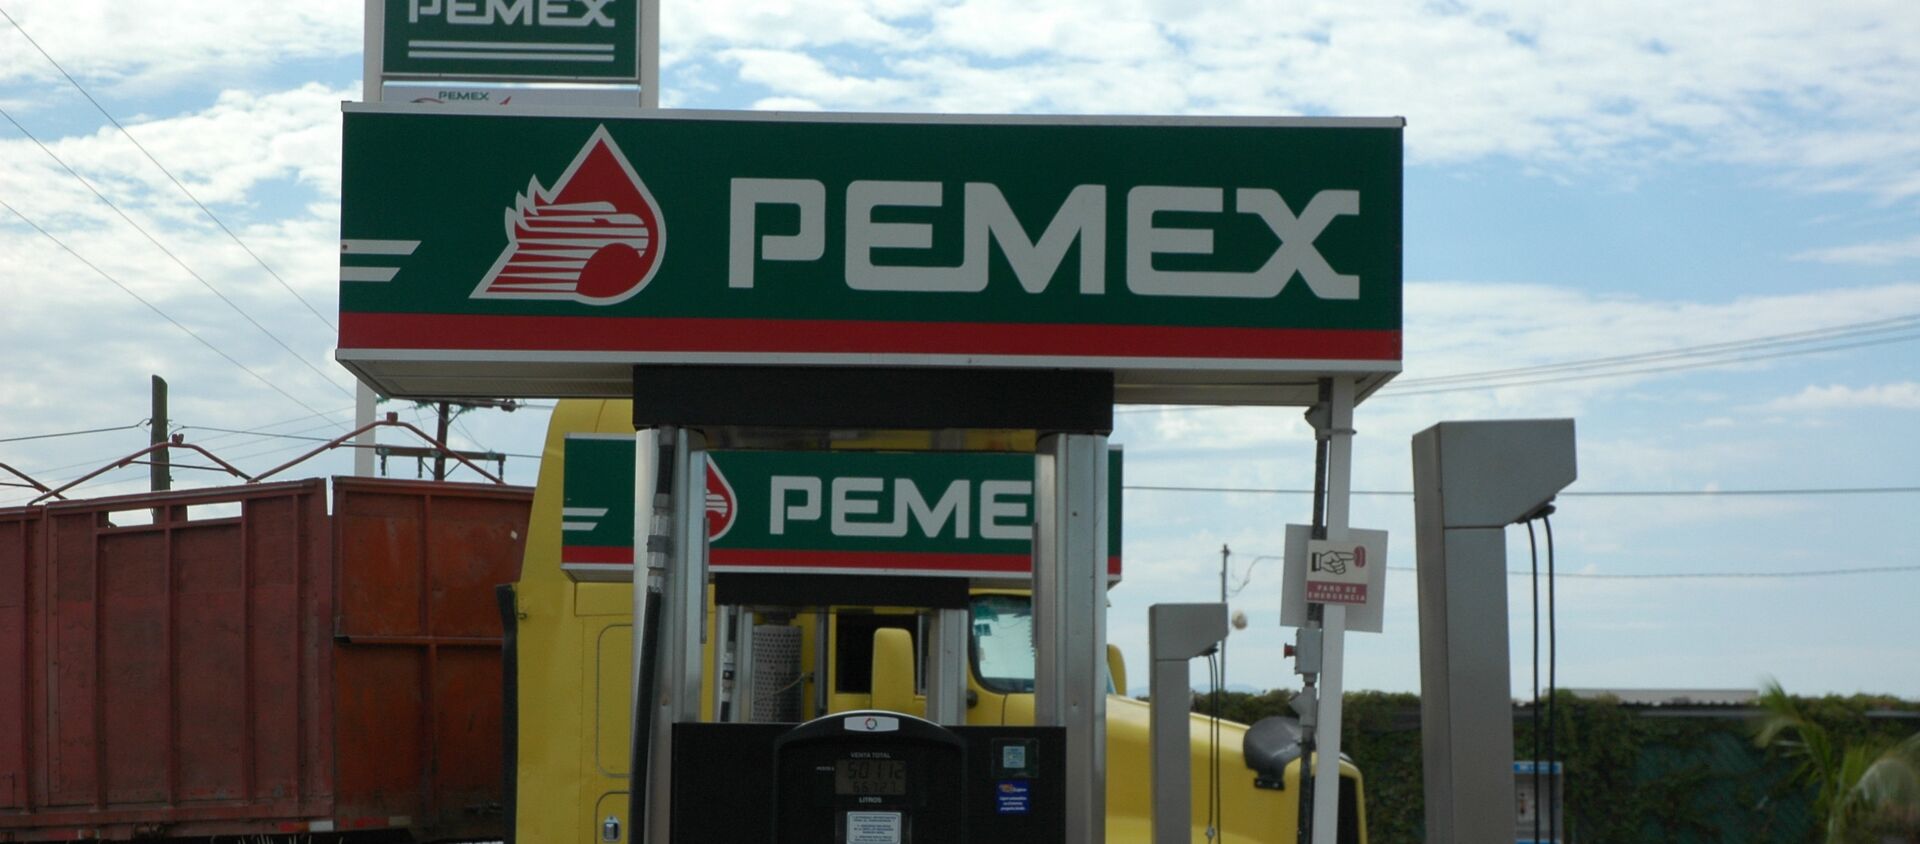 PEMEX station, with large yellow truck, Mexico - Sputnik Mundo, 1920, 17.12.2020